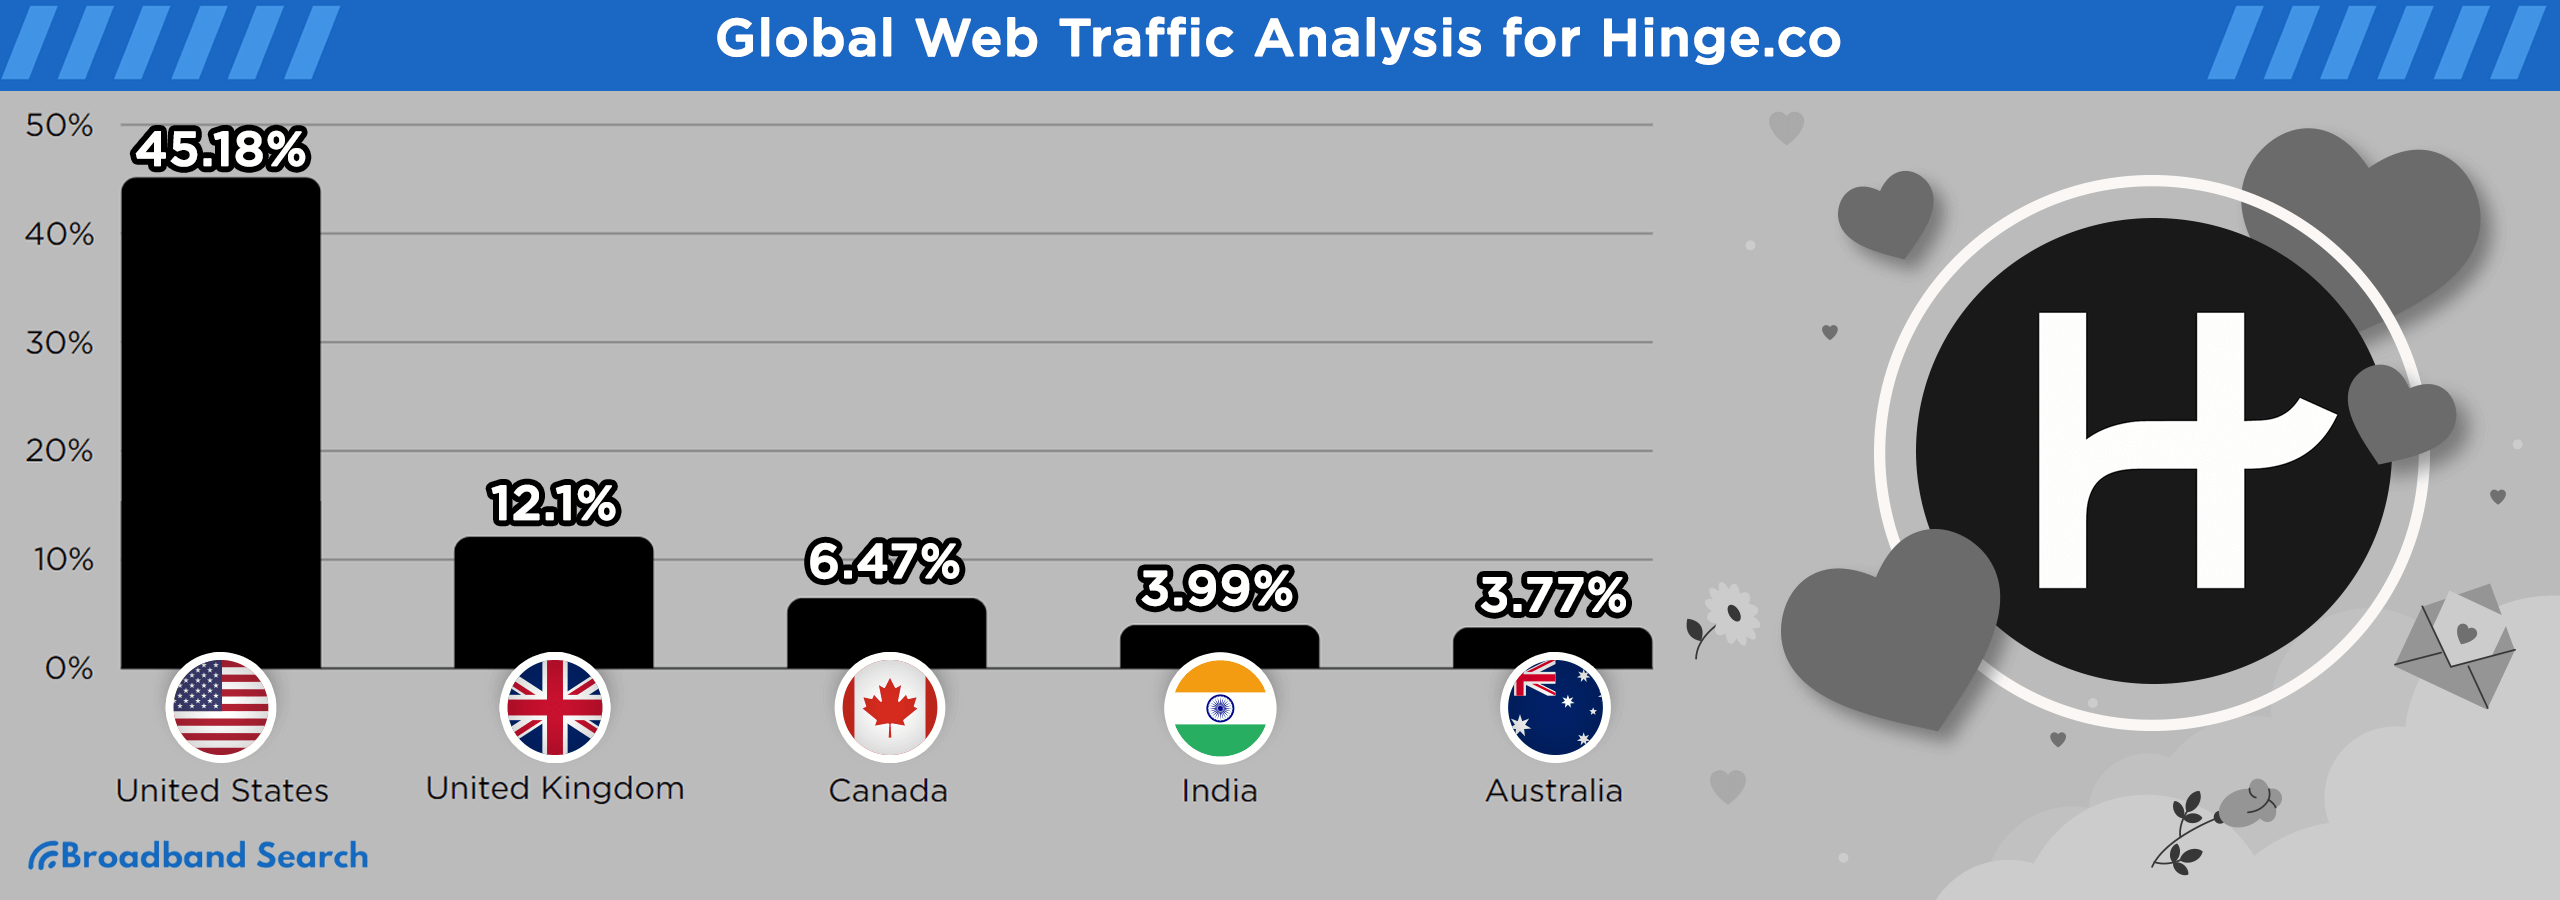 Global web traffic analysis for hinge.co